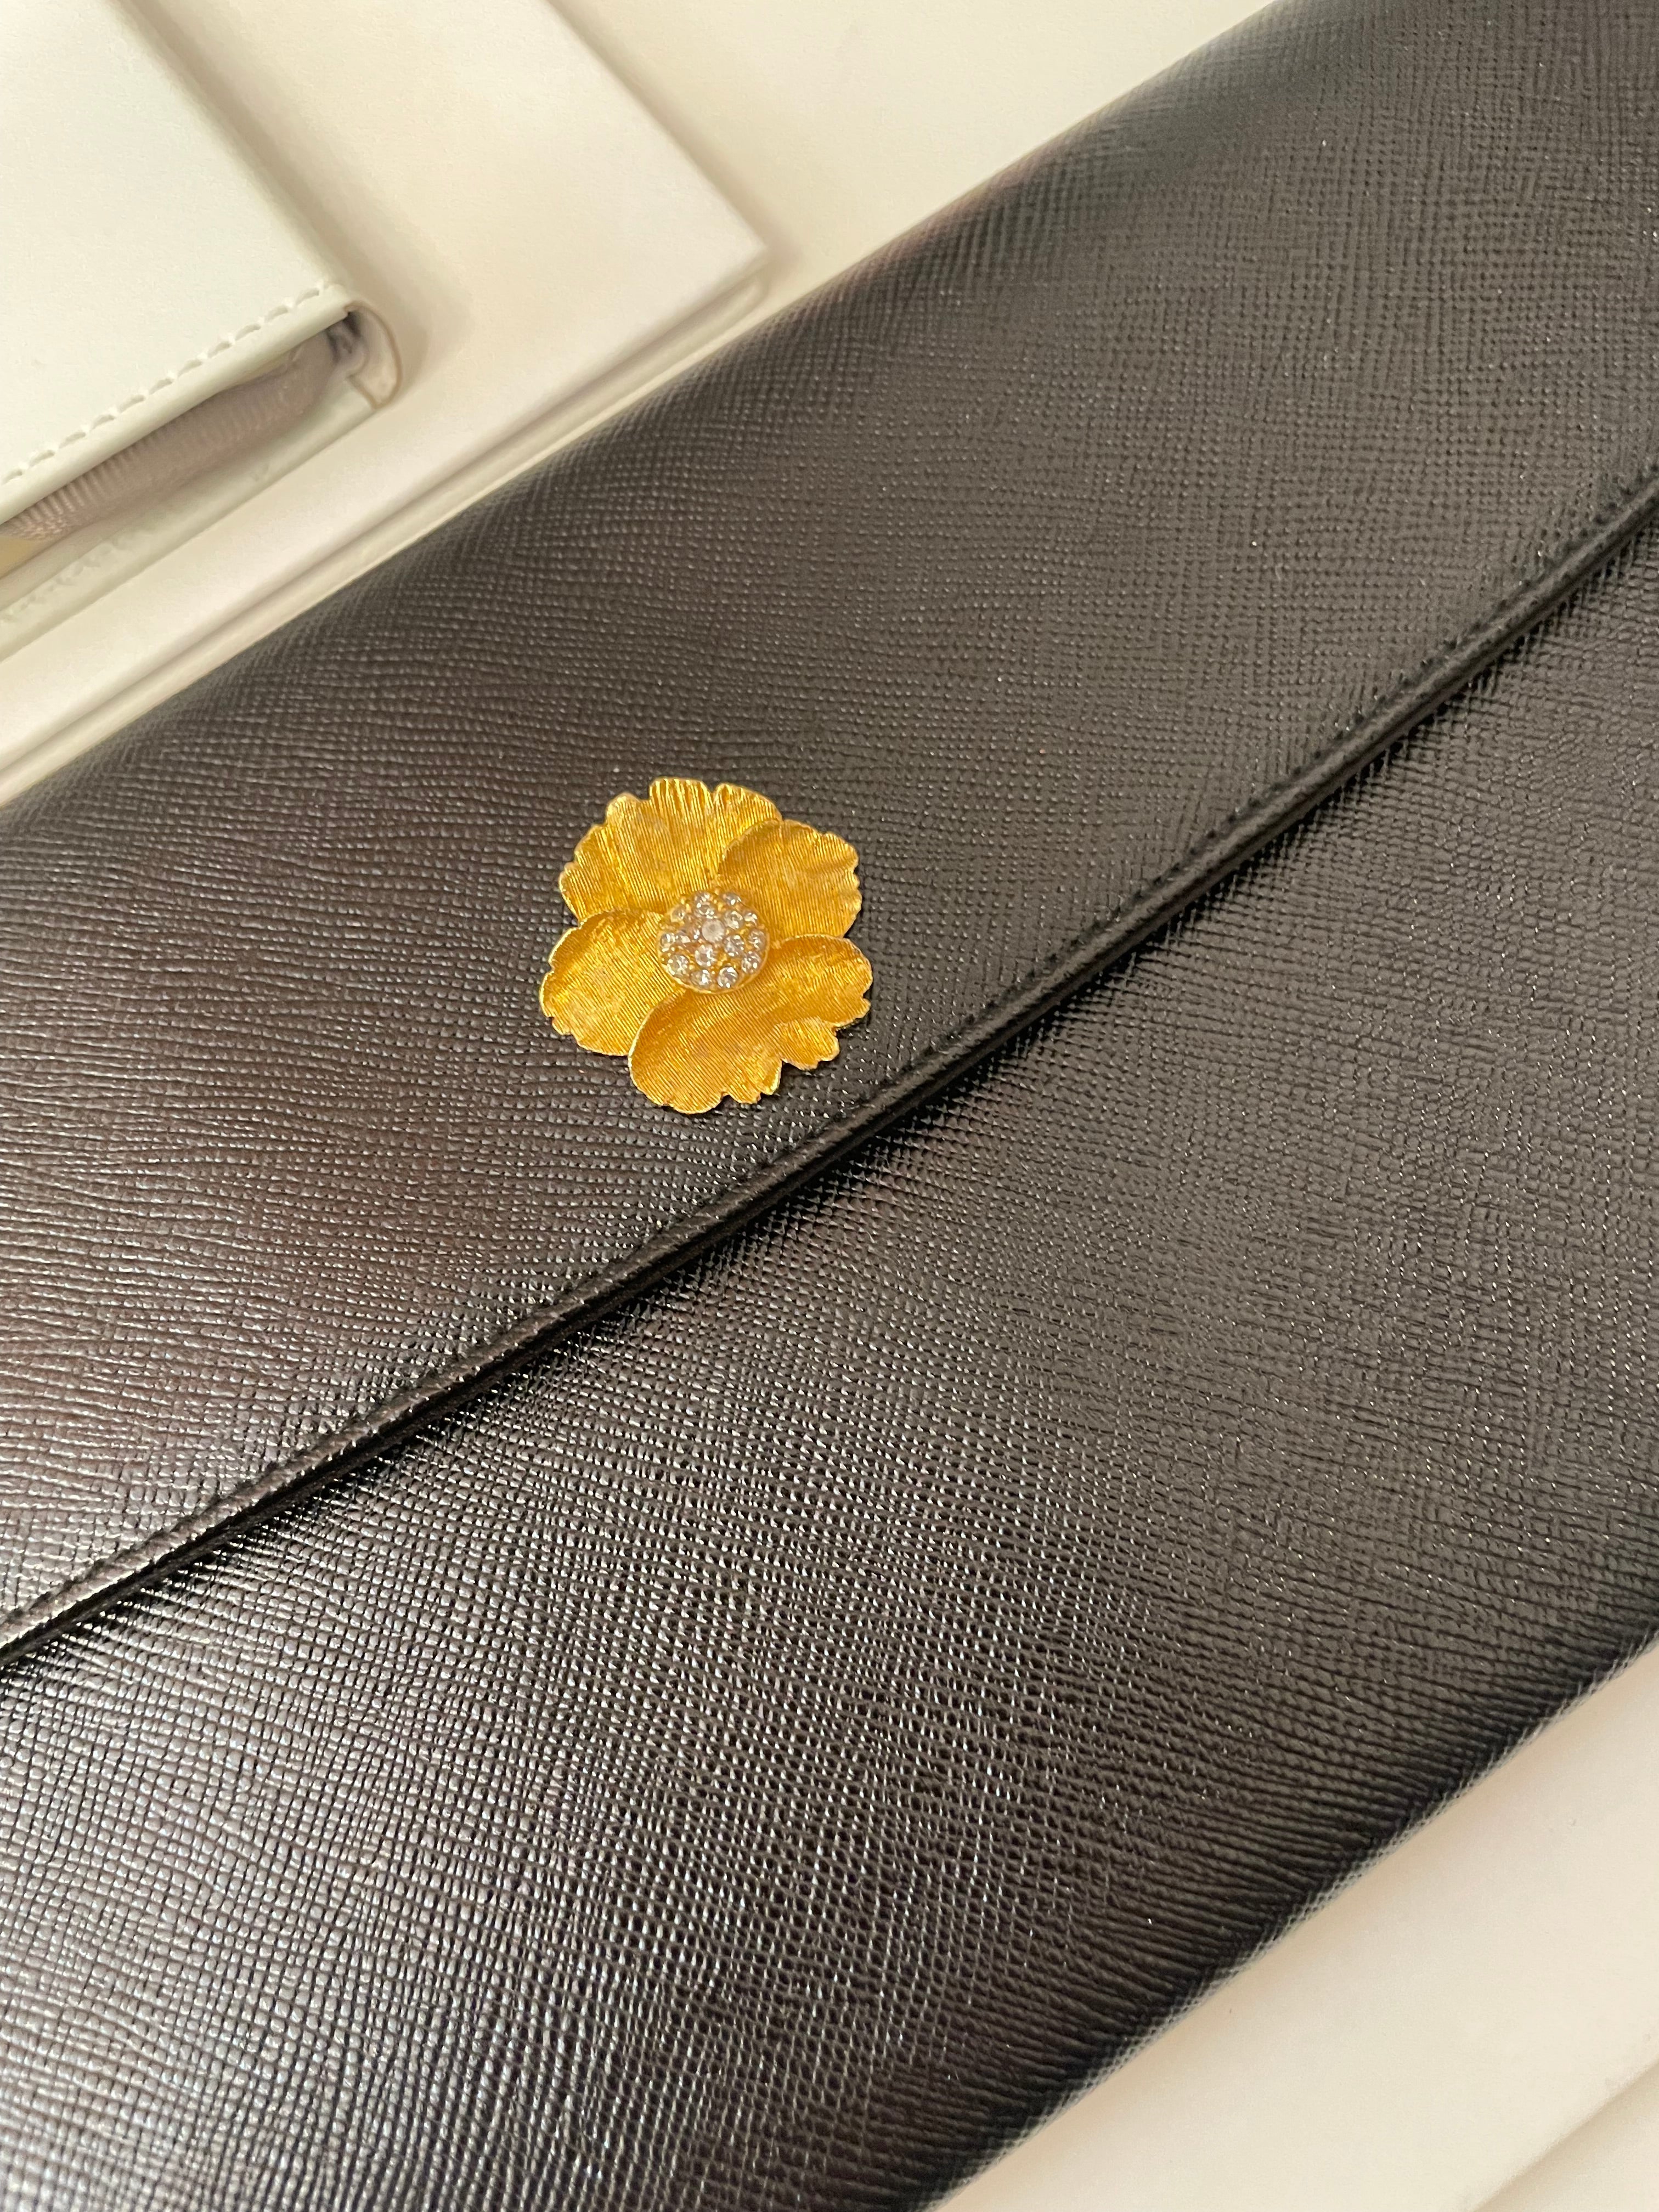 Vintage 1960's Prestige noir clutch bag for Saks Fifth Avenue, adorned with chic gold flower..so lady like!